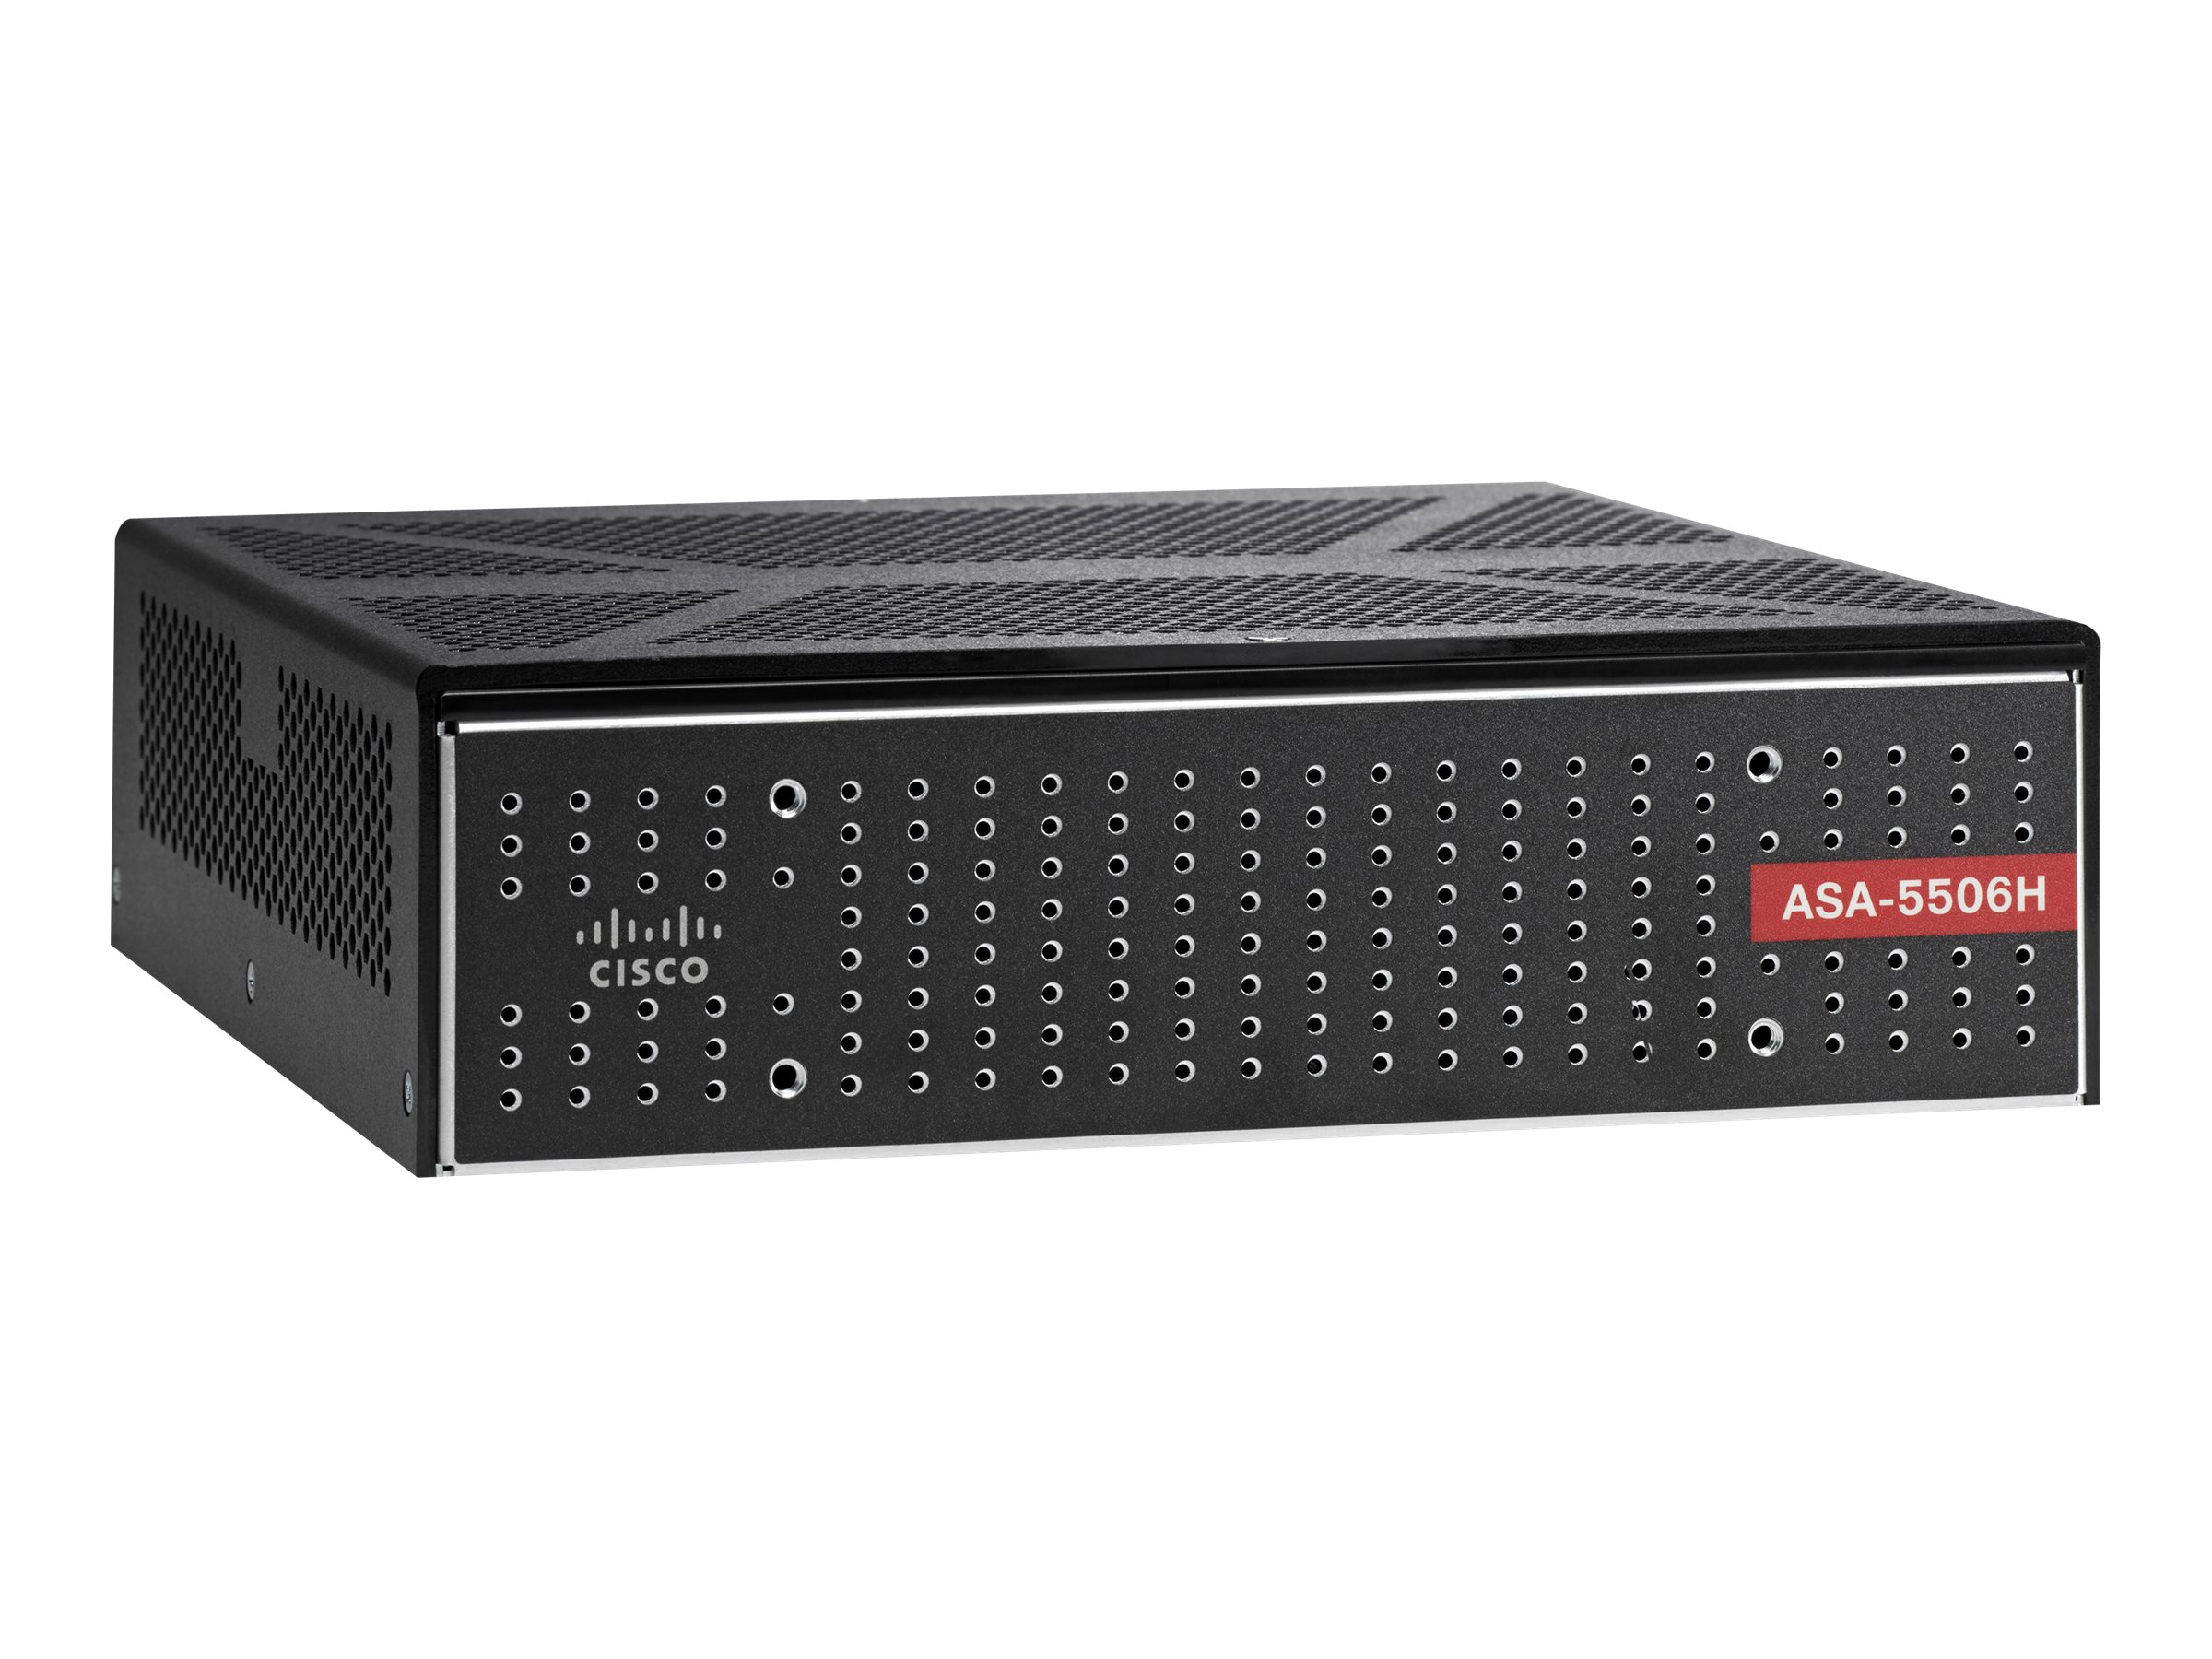 Cisco ASA 5506H-X with FirePOWER Services - Security Plus Bundle